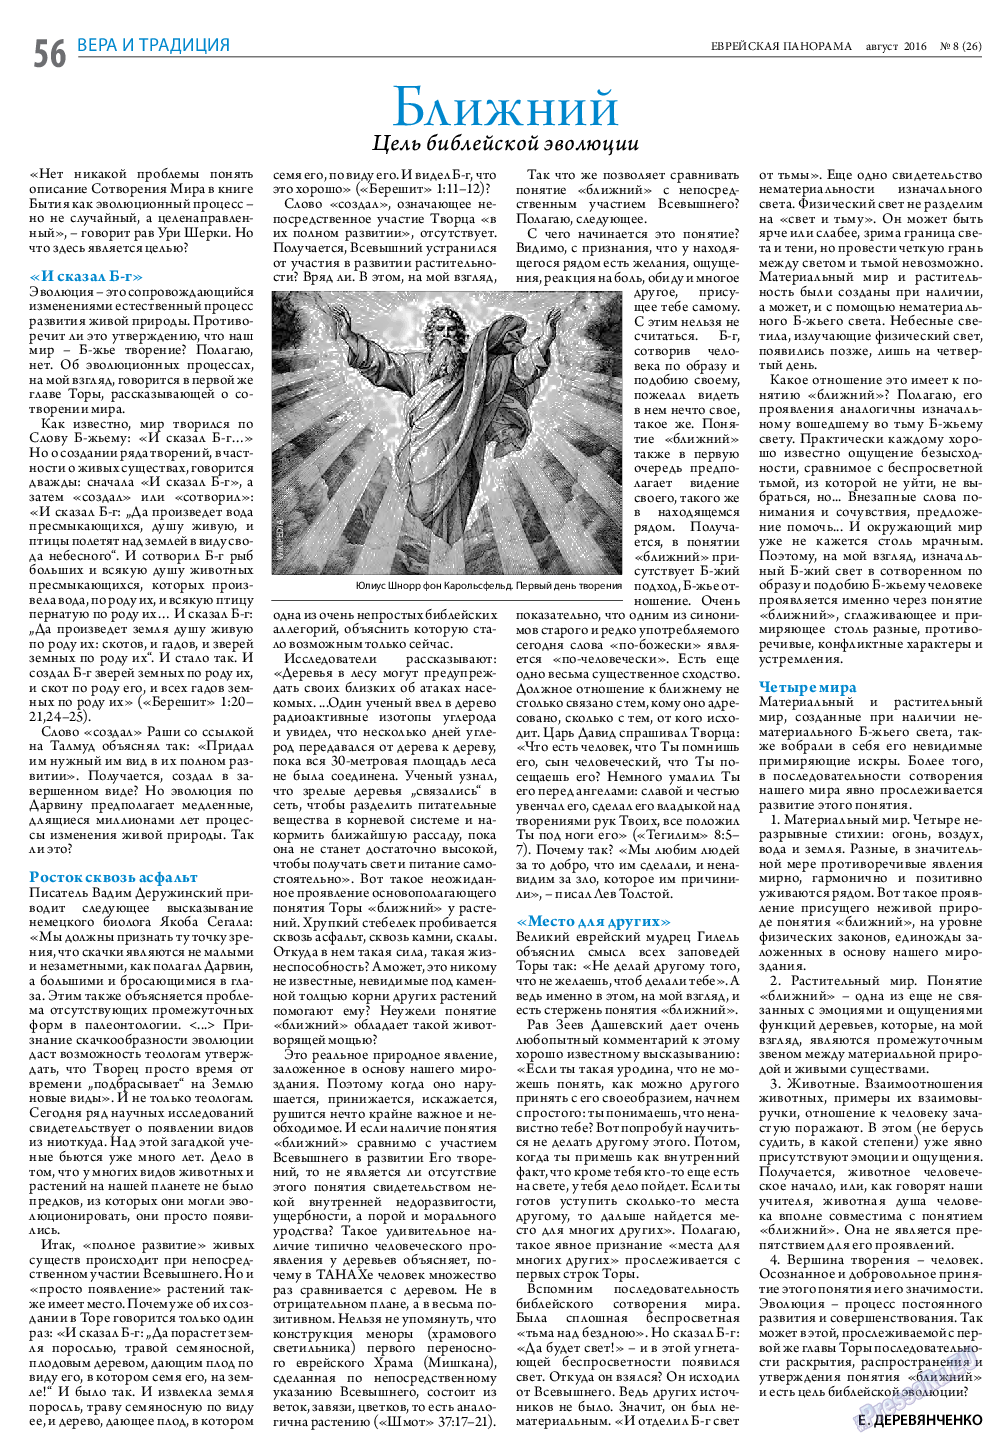 Еврейская панорама, газета. 2016 №8 стр.56